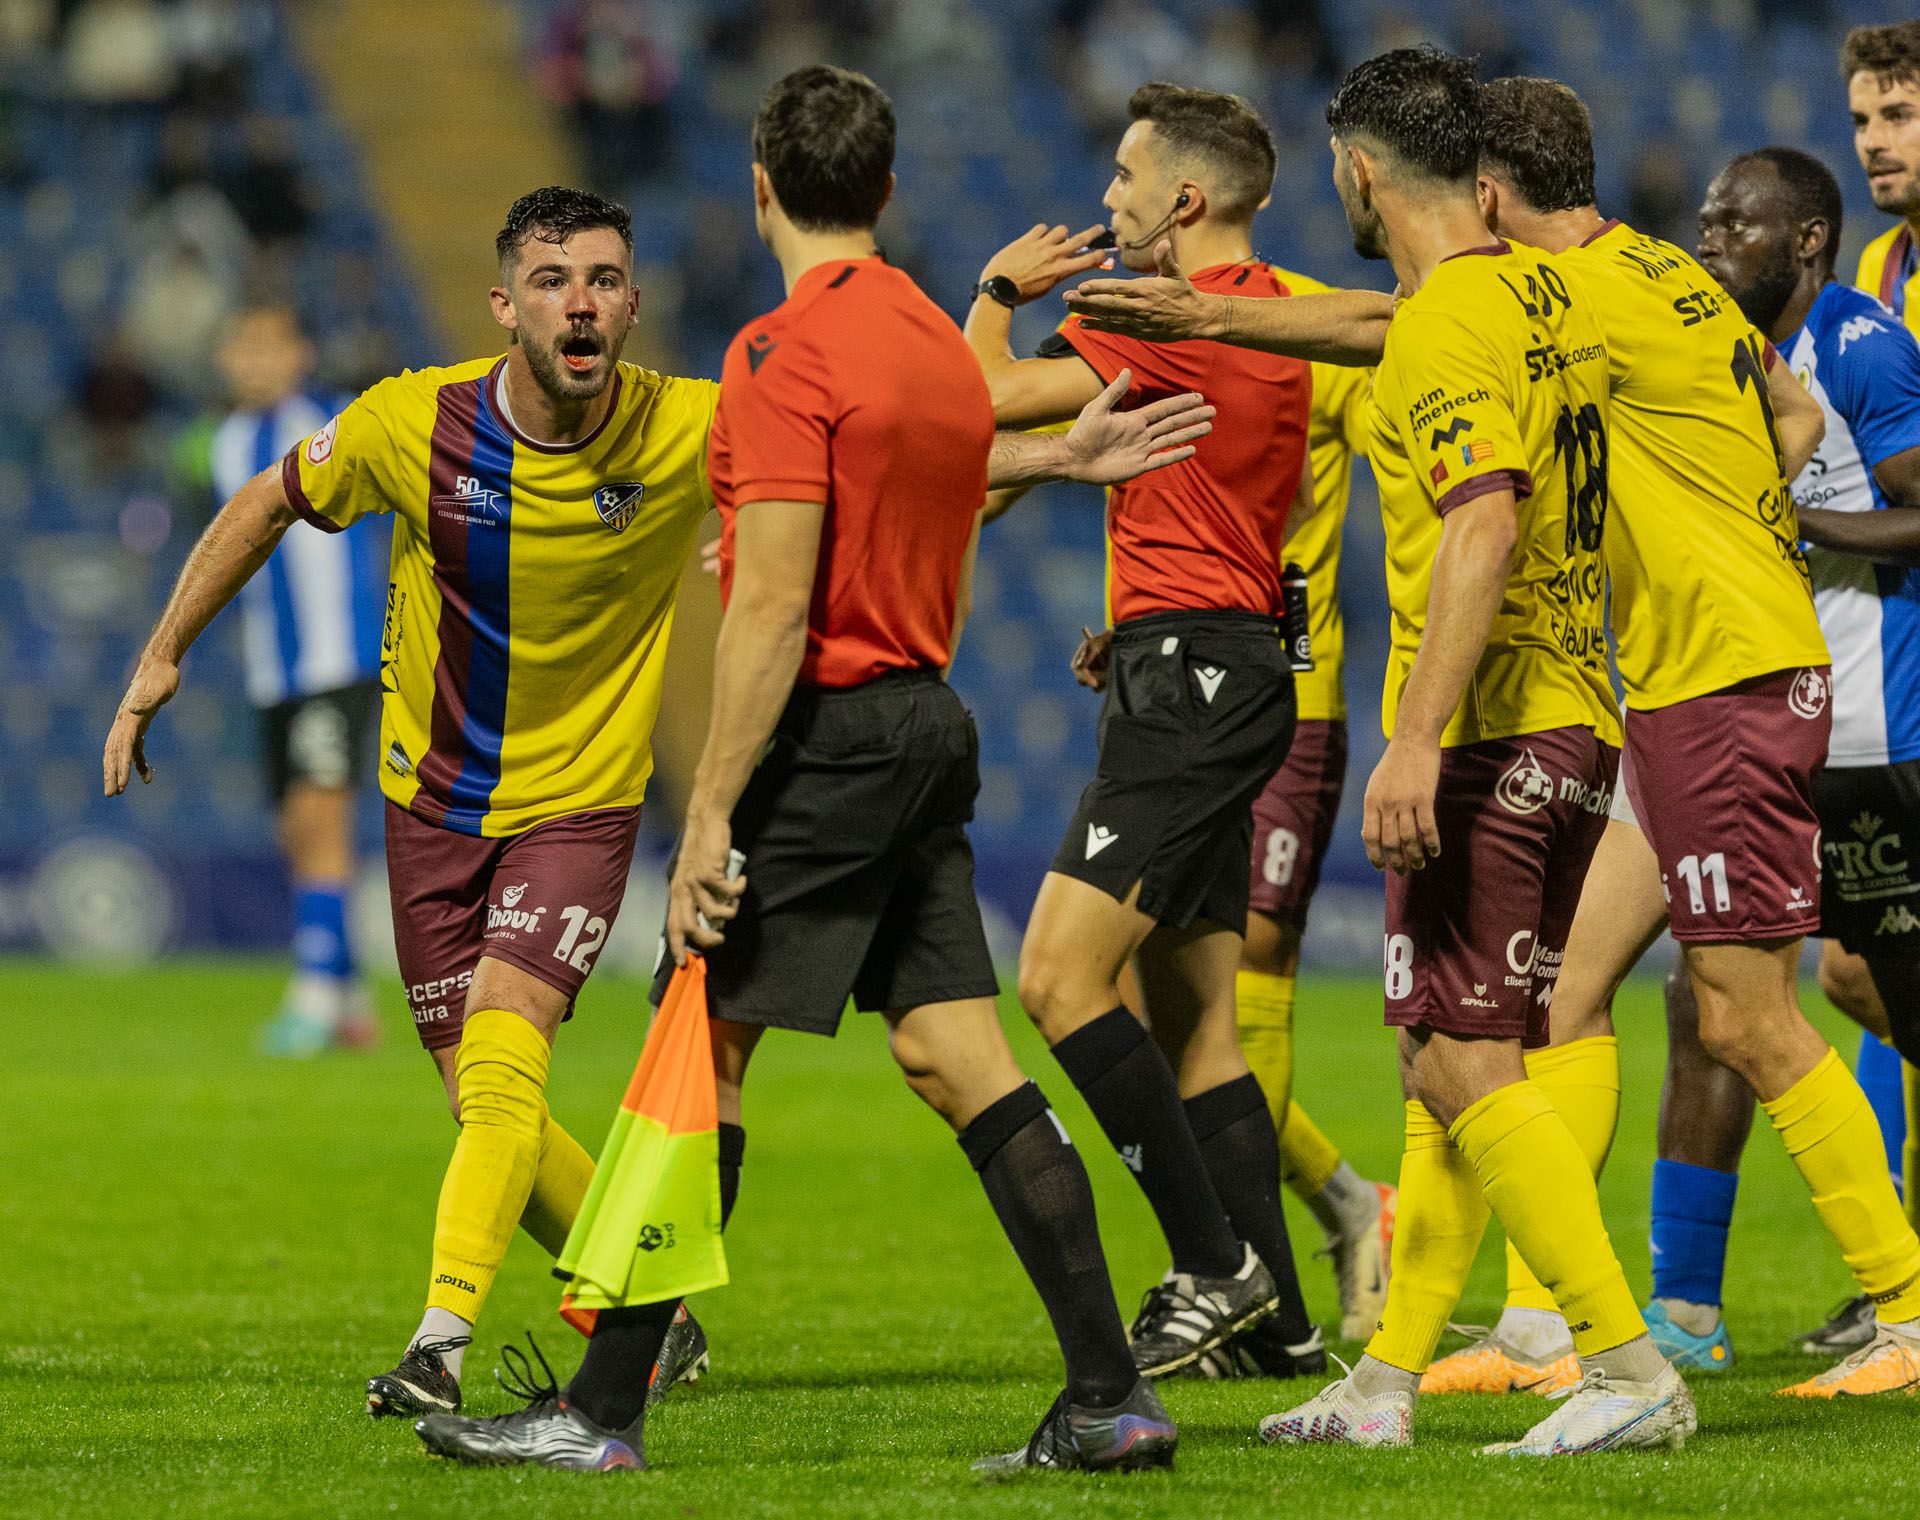 Hércules - Alzira  (1-1): Las mejores fotos primer empate del Hércules en el Rico Pérez